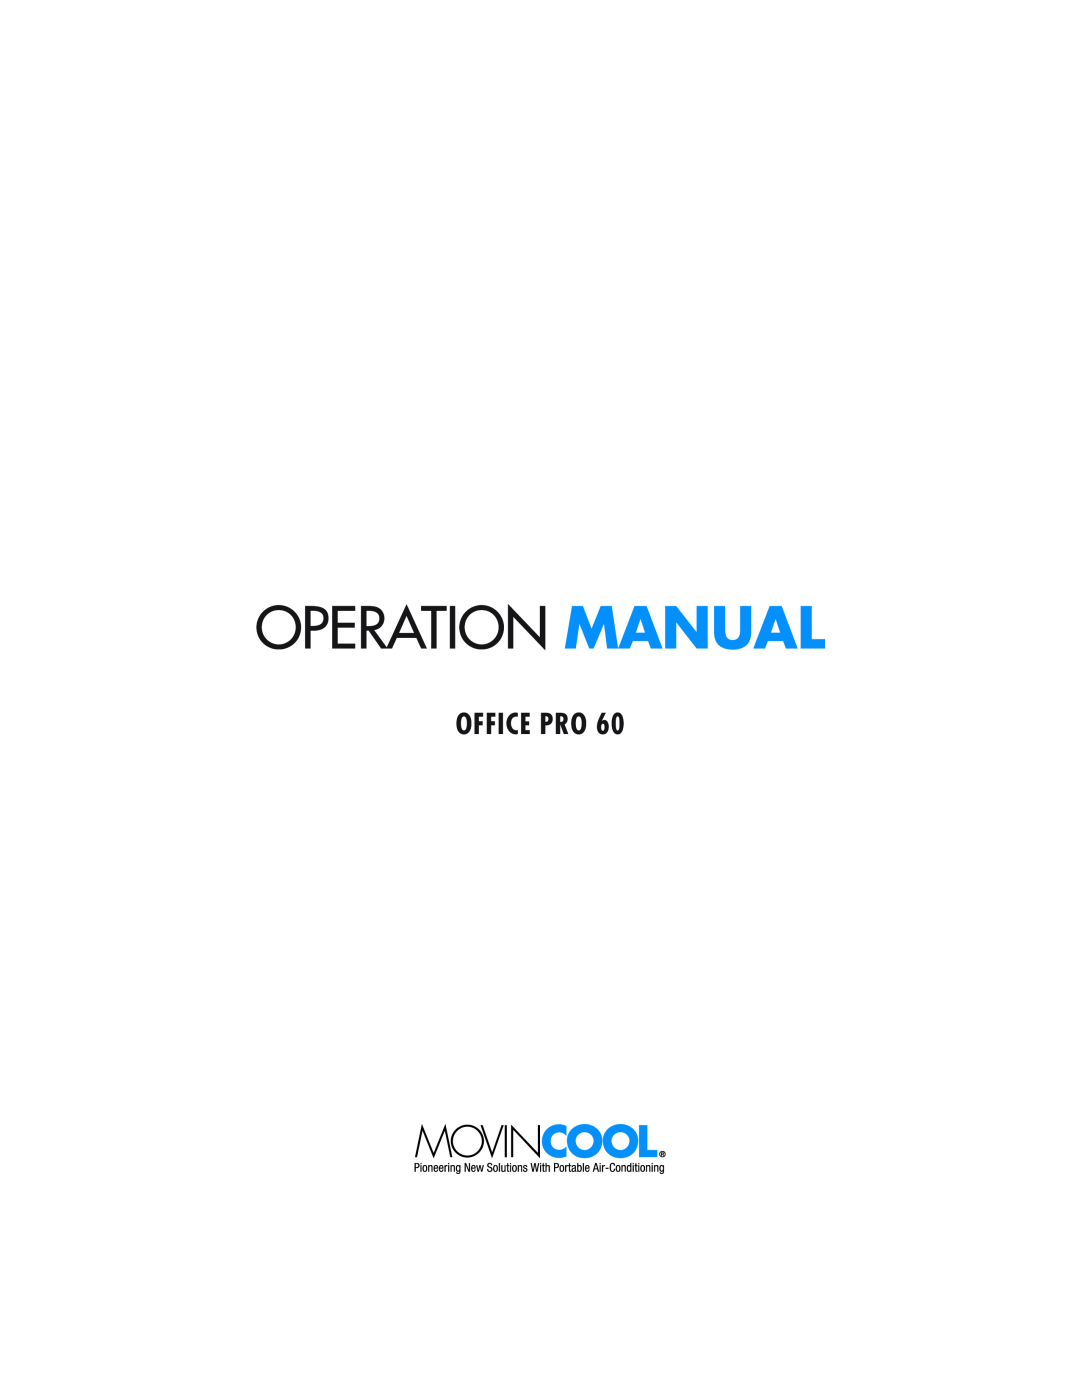 Denso PRO 60 operation manual Office Pro 